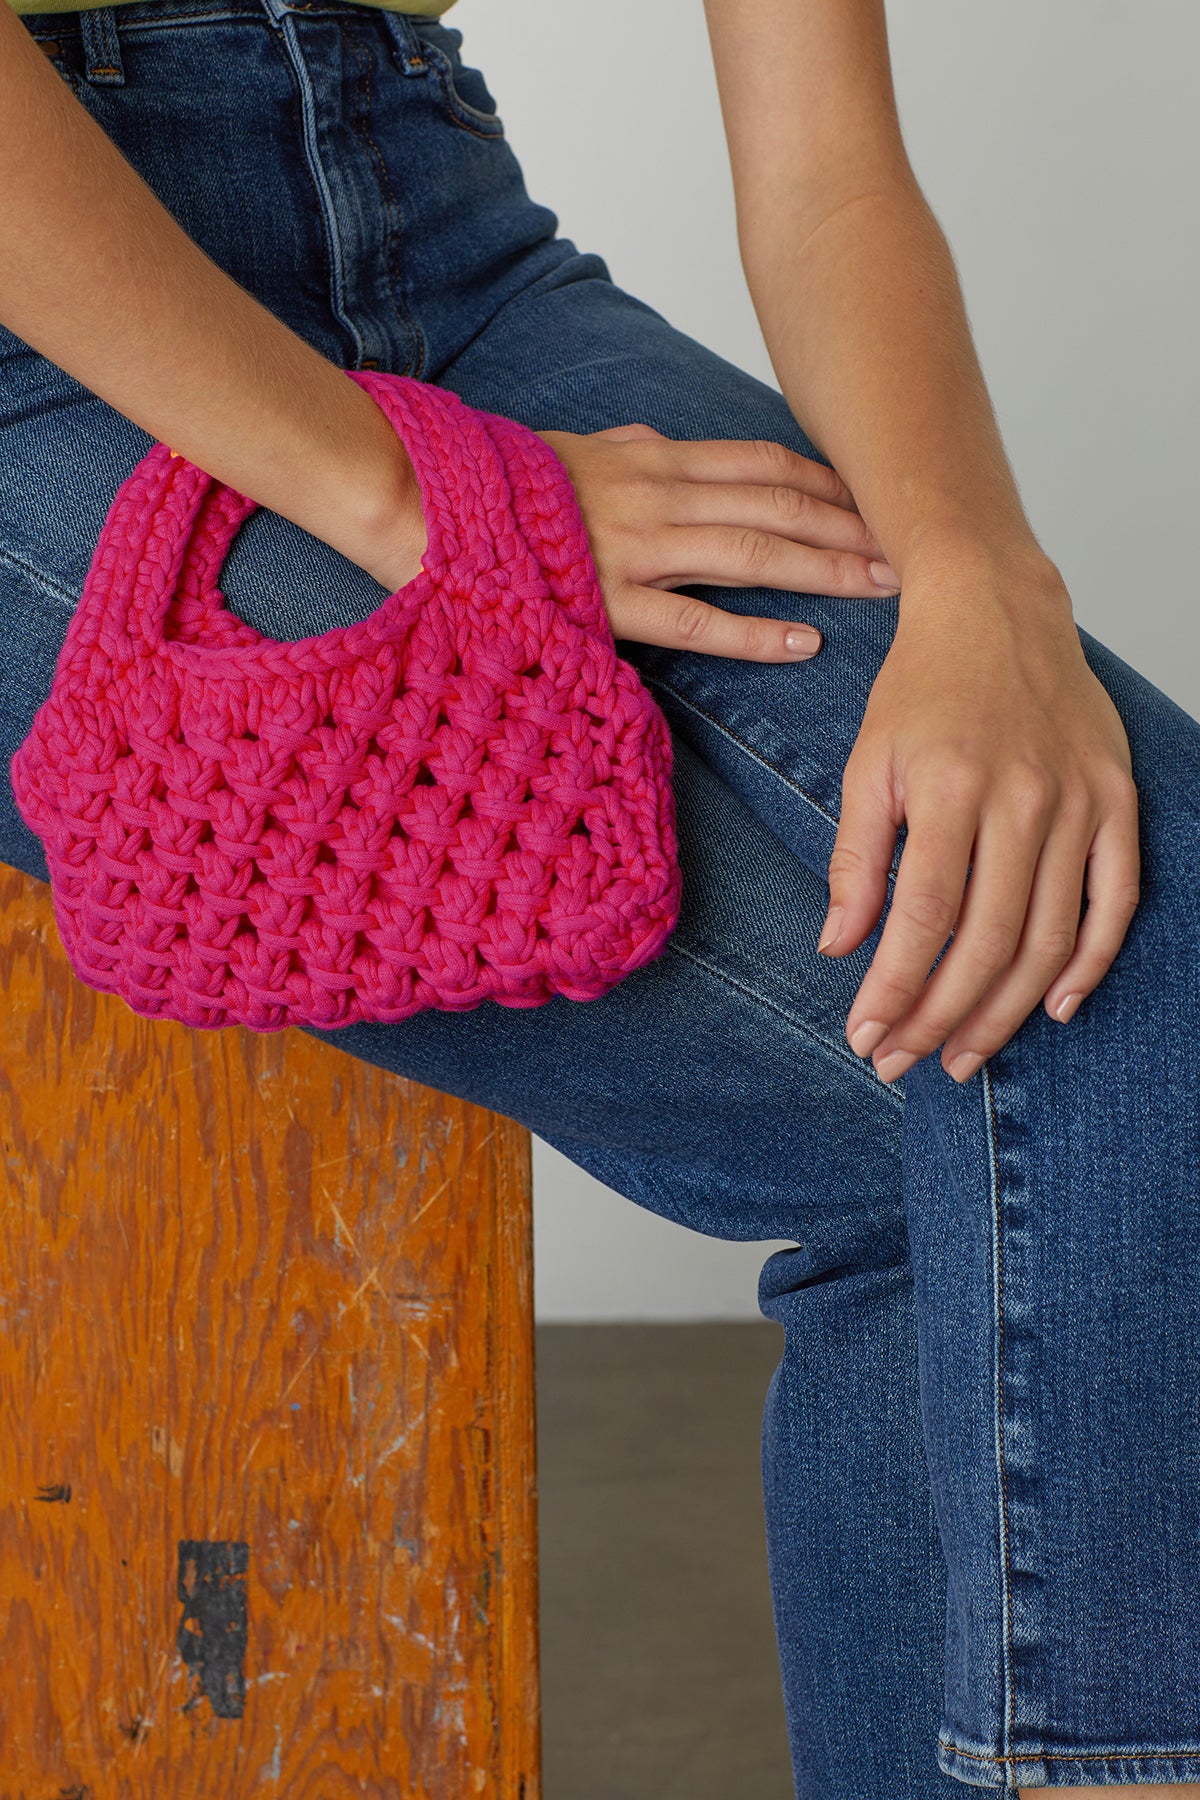   Bennie Crochet Bag in magenta pink on model's wrist 